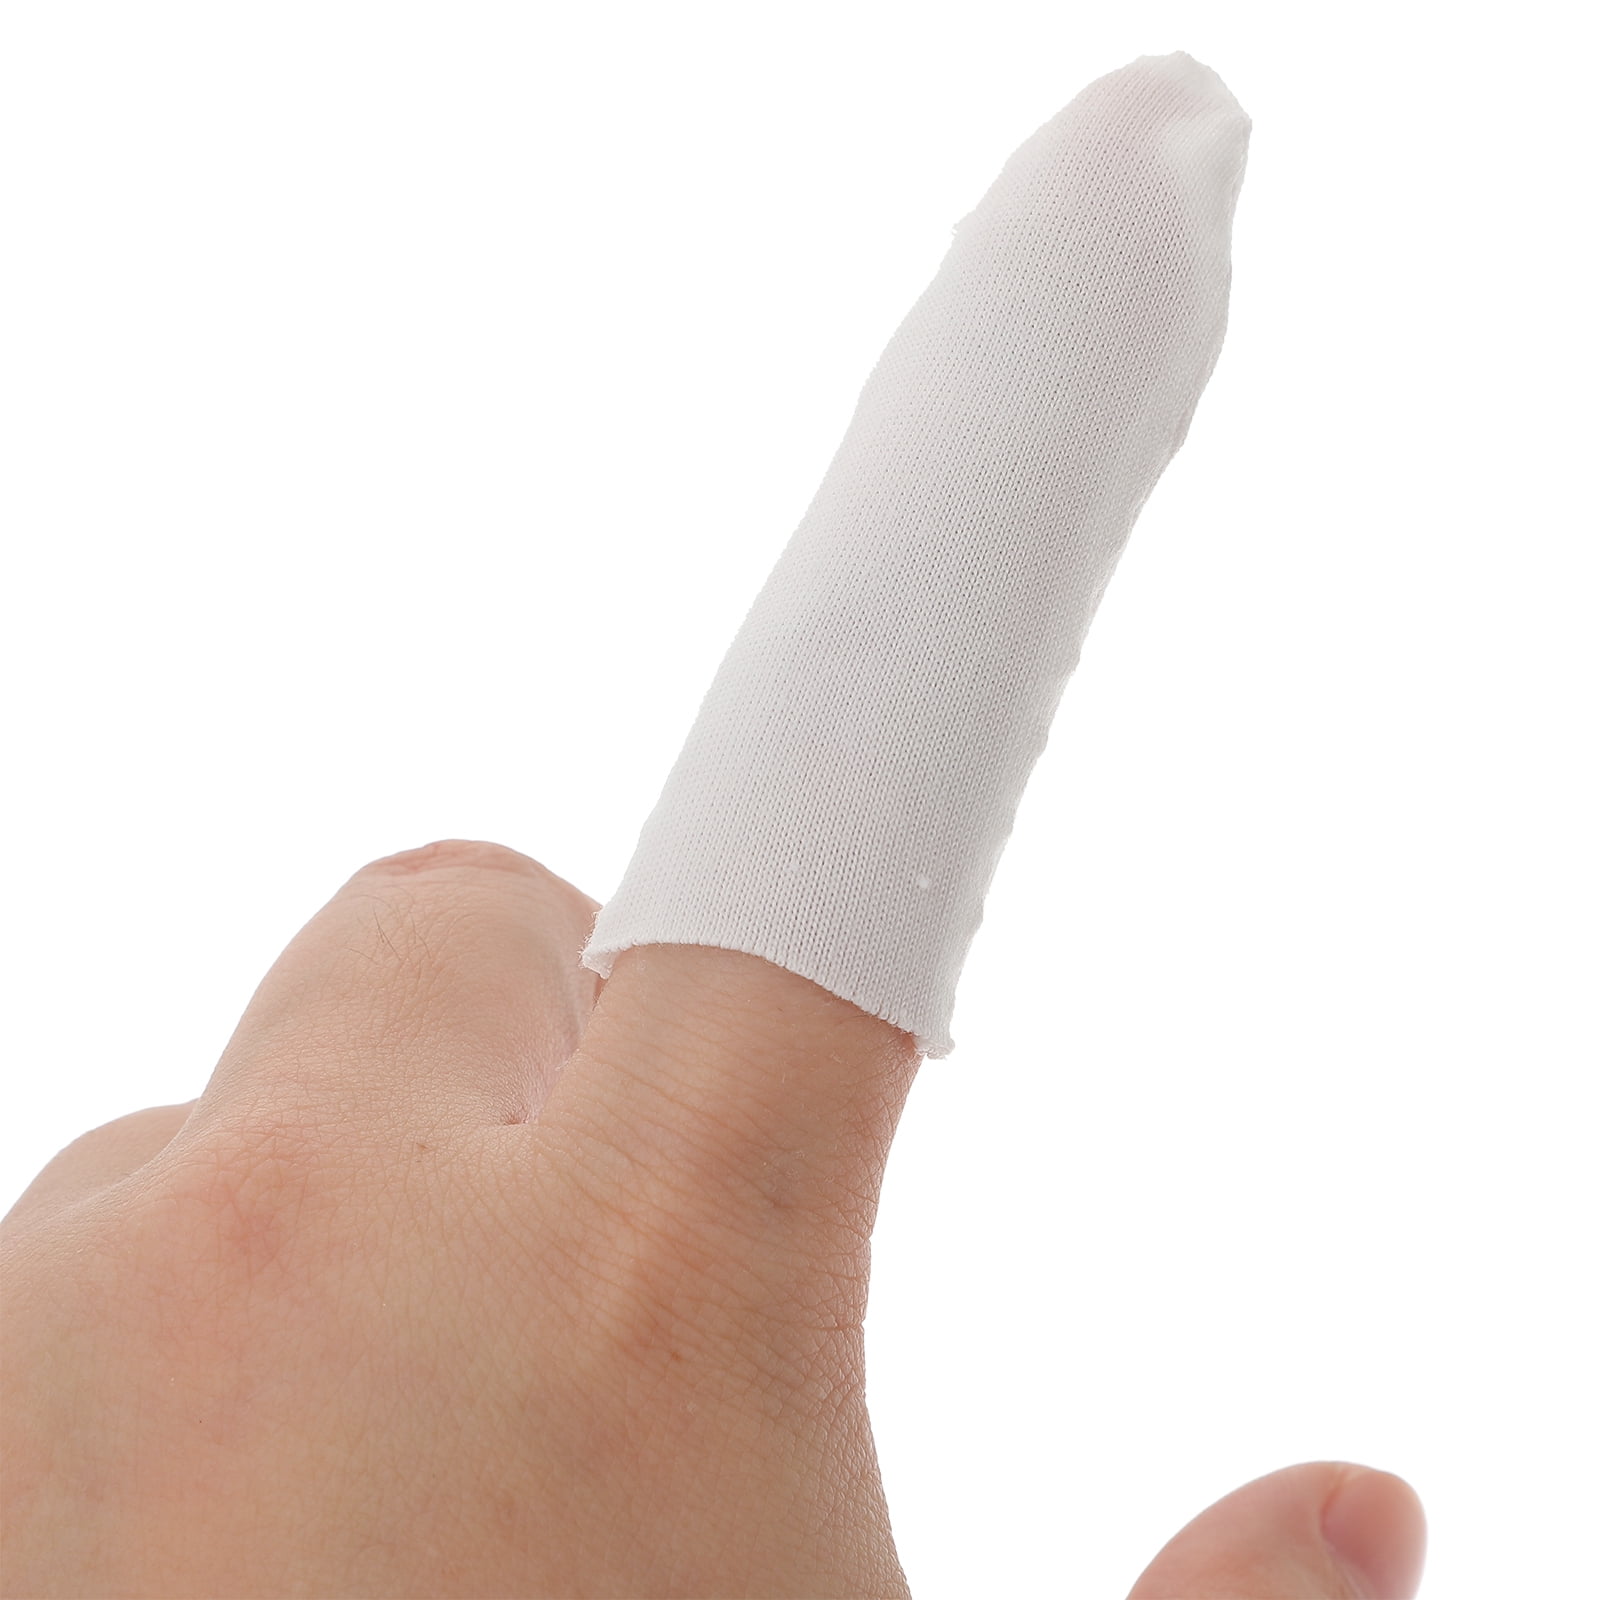 Homemaxs 200pcs Nonslip Finger Protection Sleeves Anti-Cutting Finger Covers Cotton Finger Cots Finger Protectors, Size: Medium